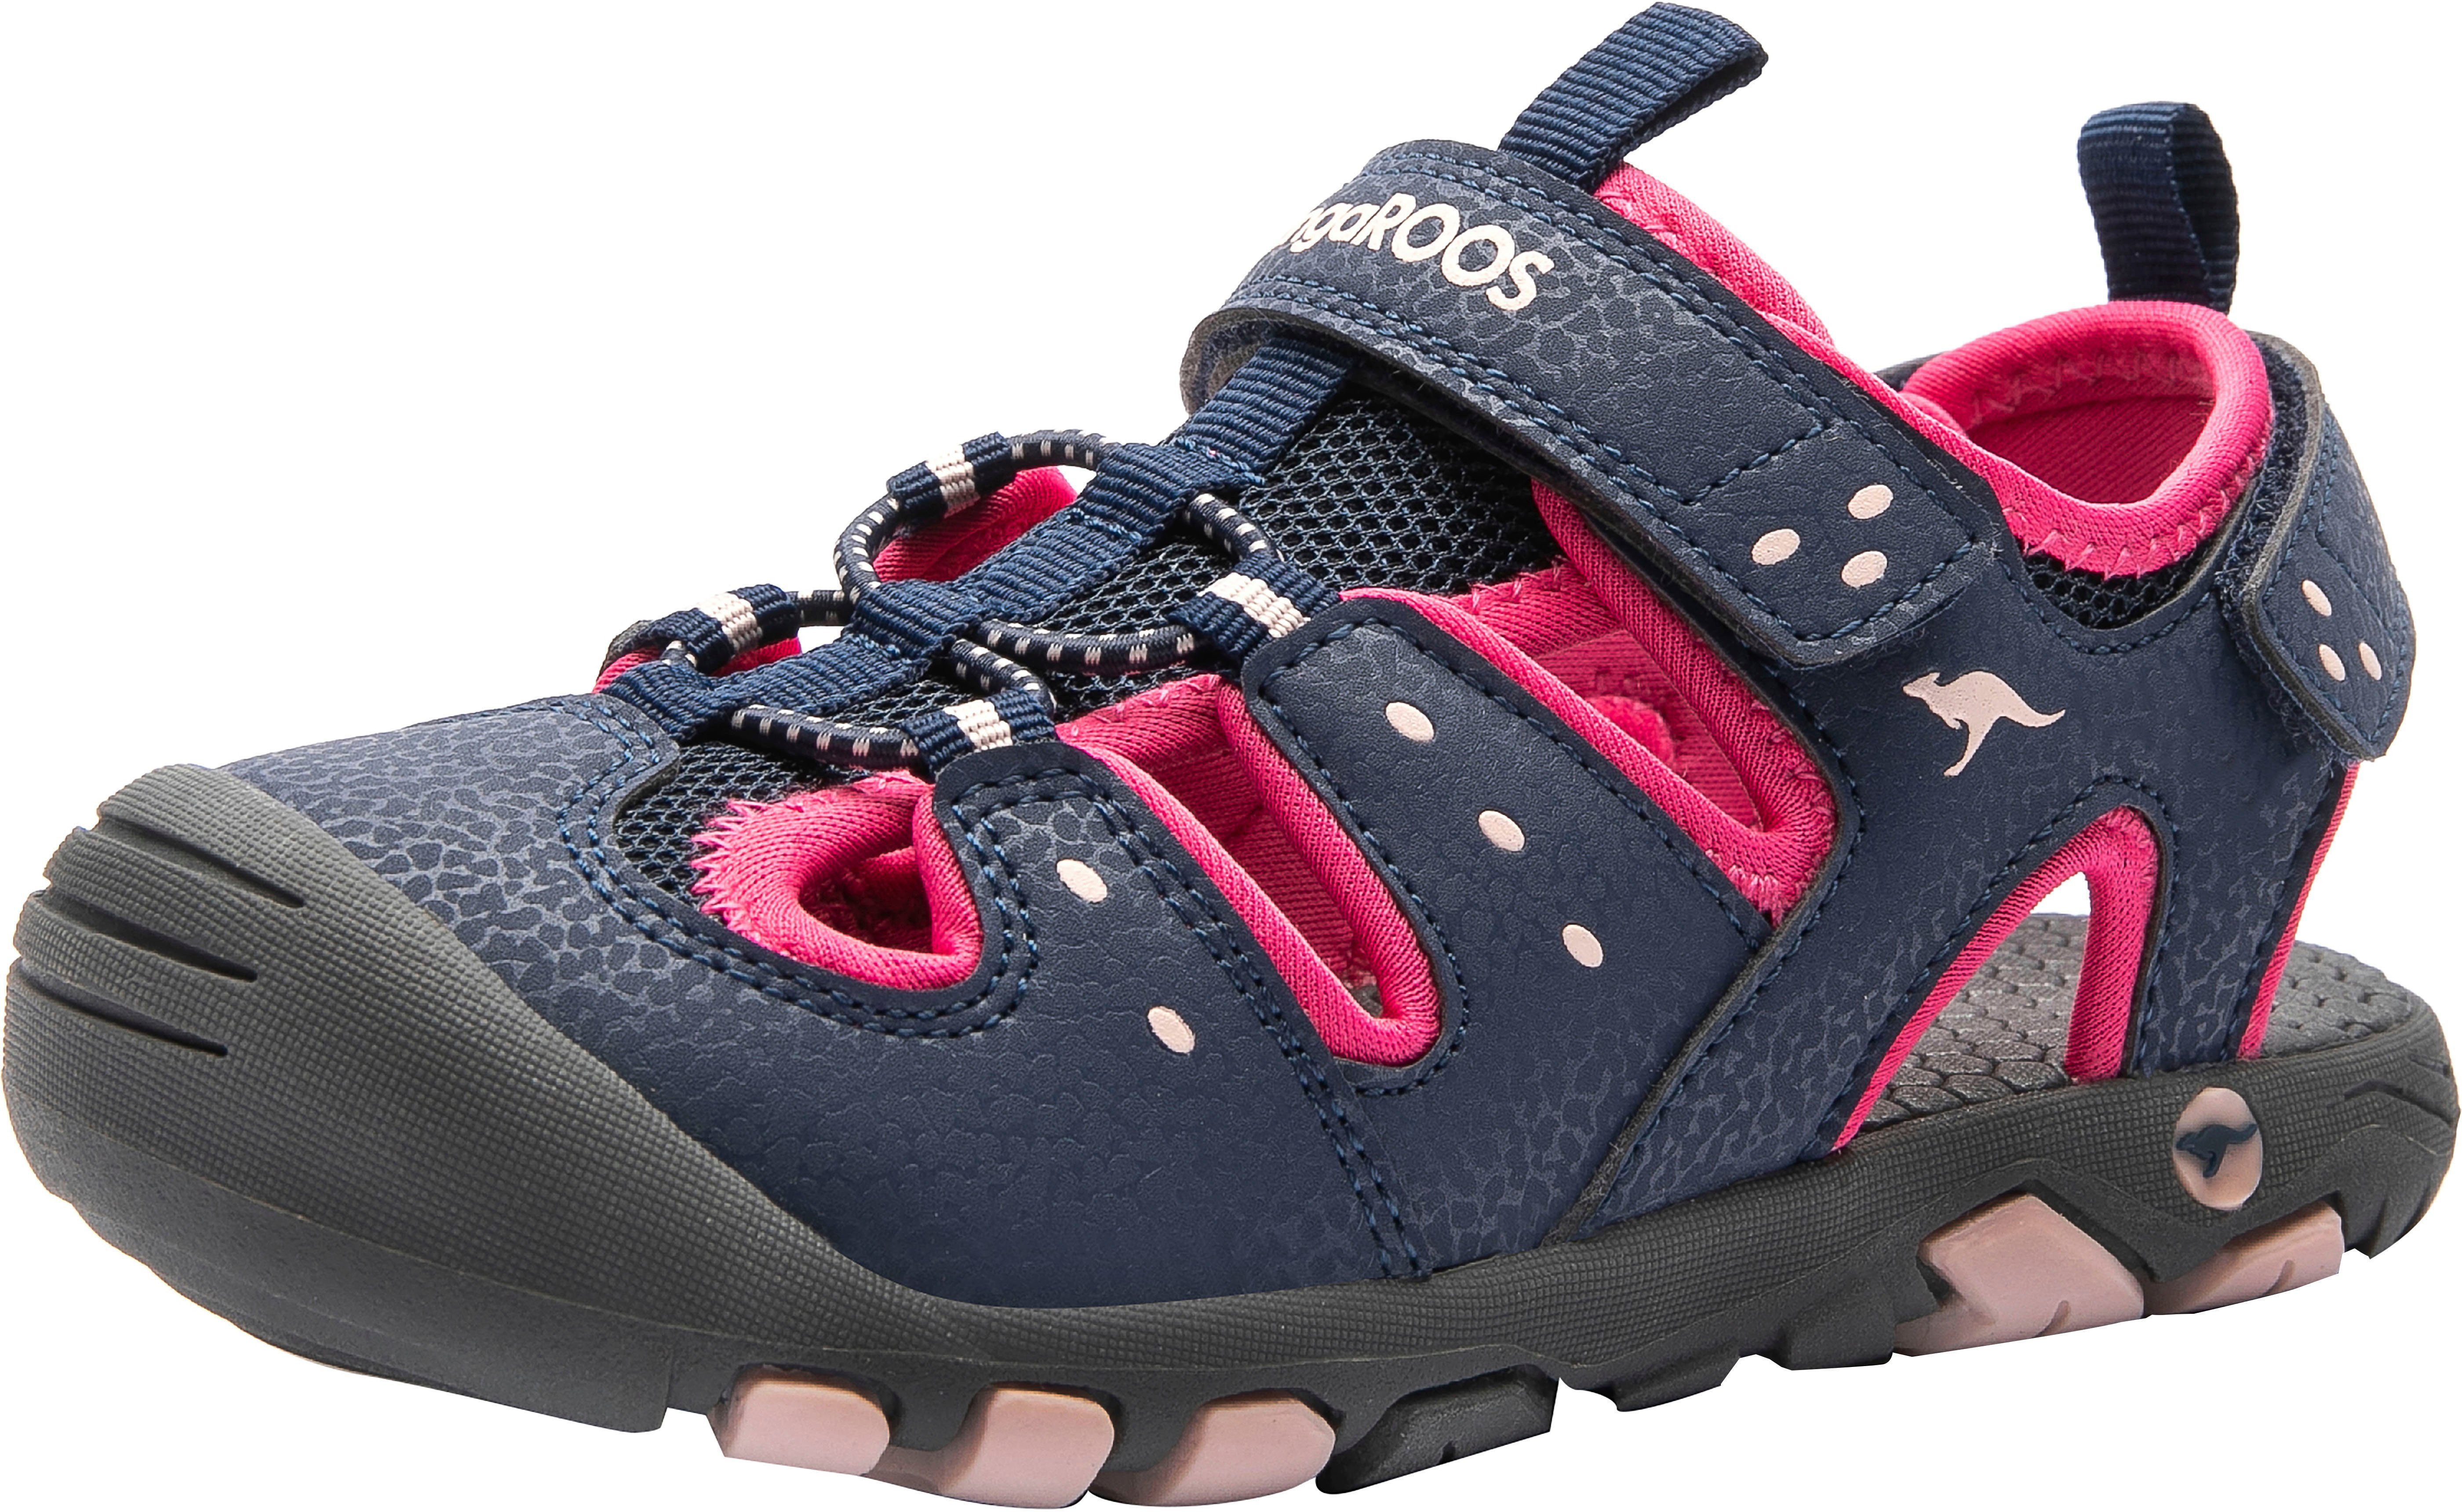 KangaROOS K-Trek Sandale mit Klettverschluss blau-pink